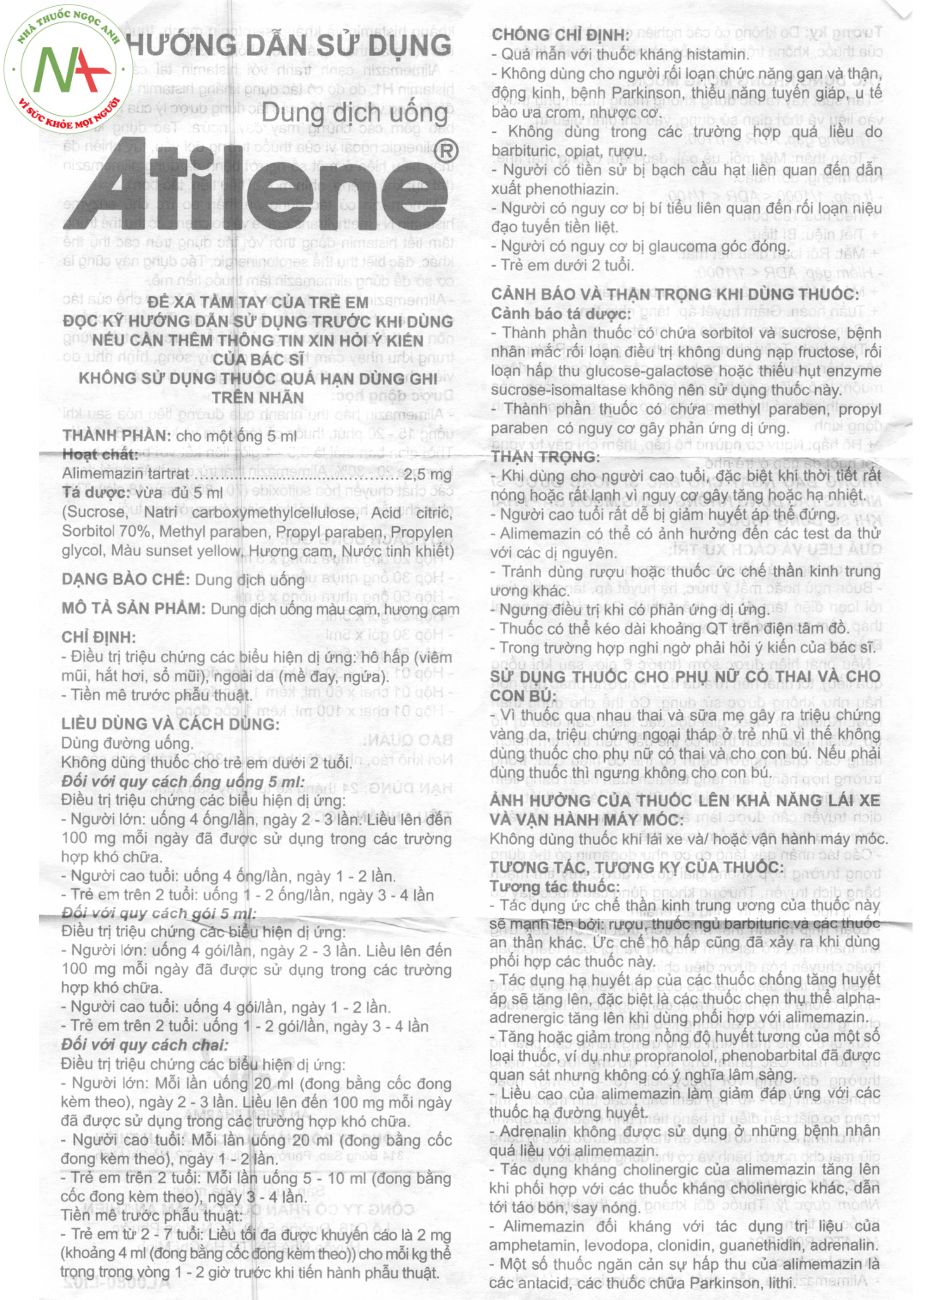 Hướng dẫn sử dụng thuốc Atilene trang 1